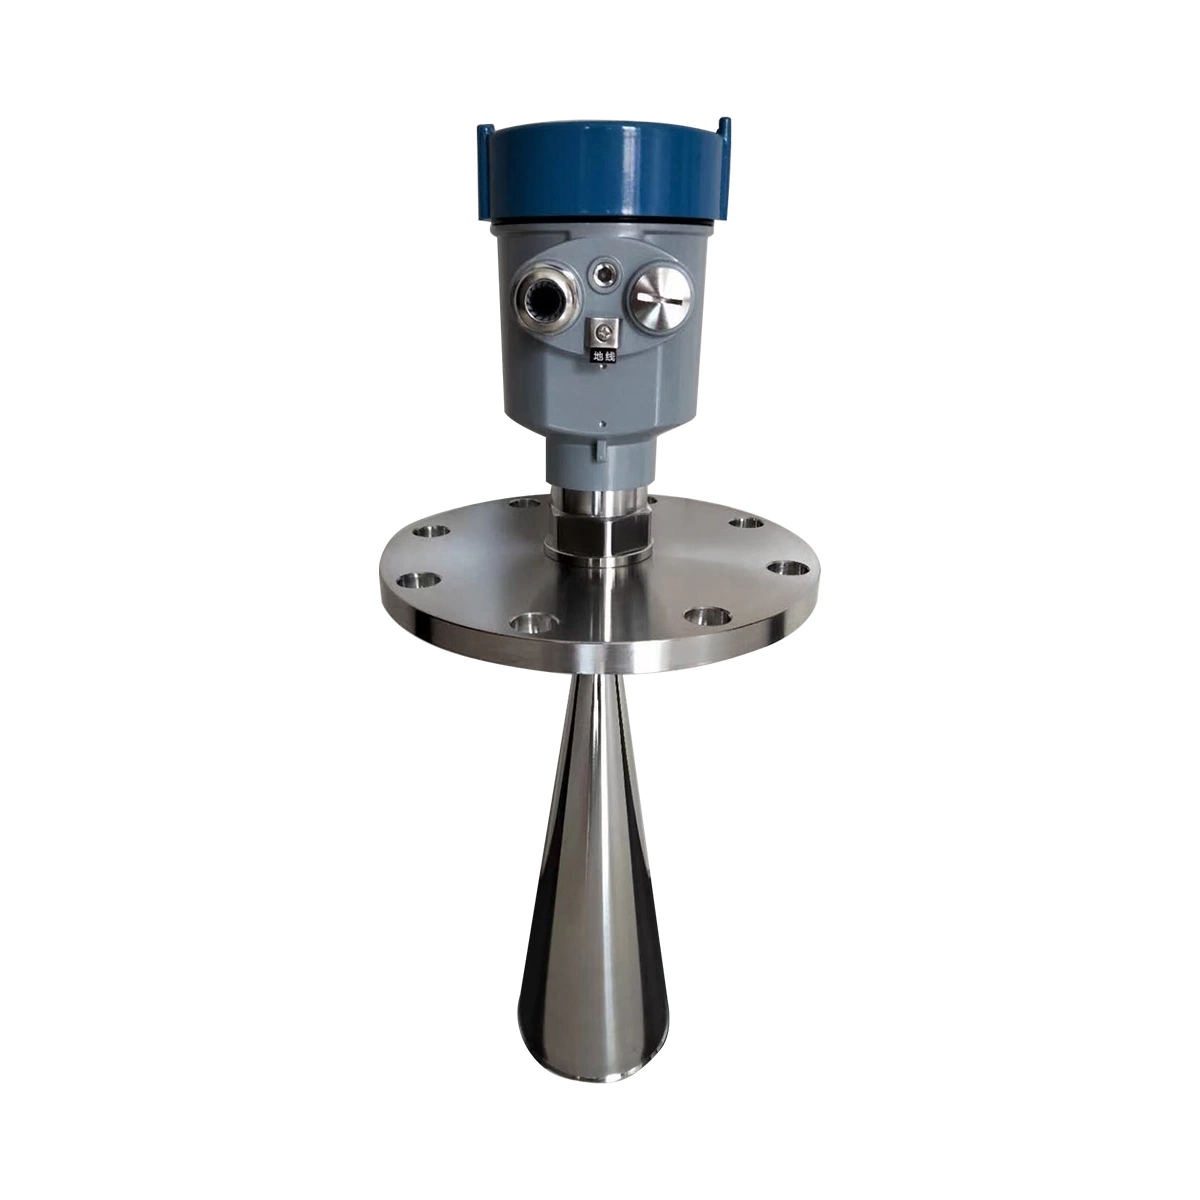 Stainless Steel Radar Level Meter for Oil/Fuel/Water Industrial Measurement